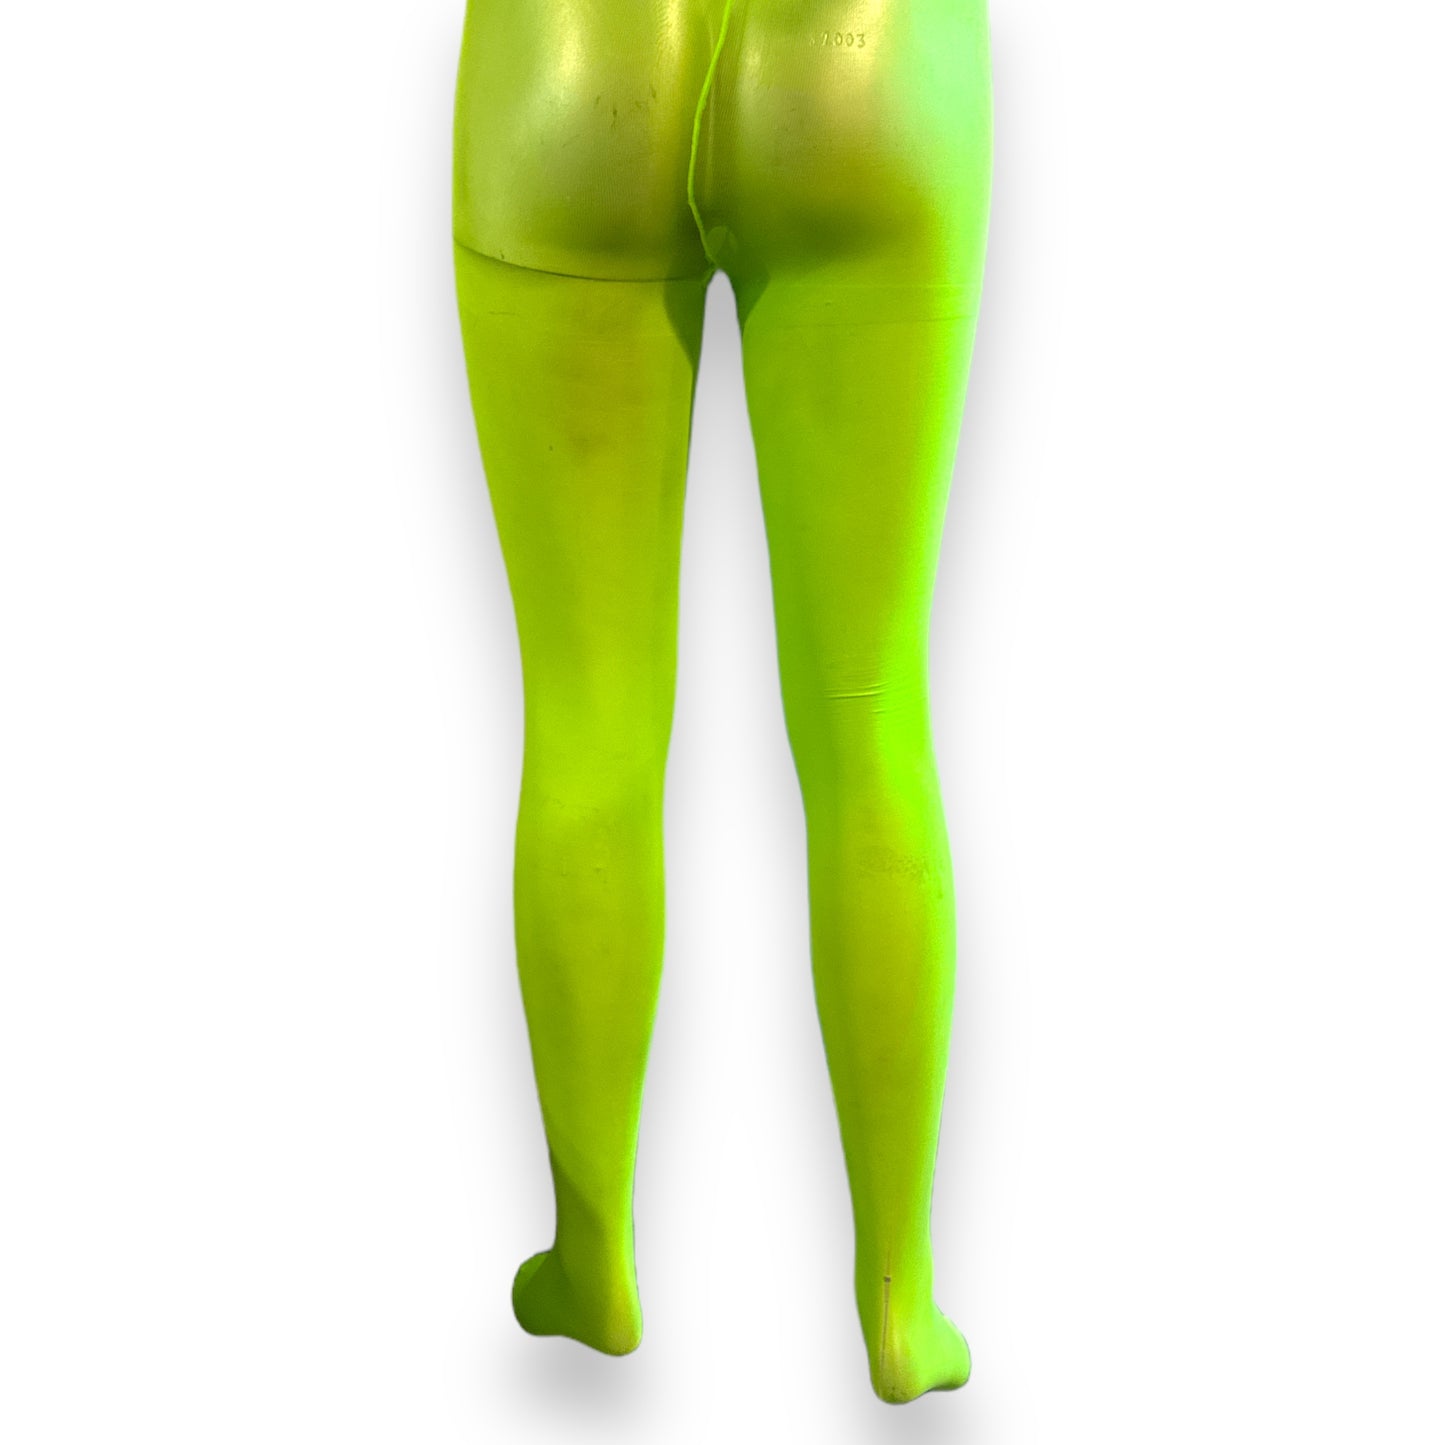 Kinky Pleasure - MP052 - Leggings In Neon Green - Available in 2 Sizes